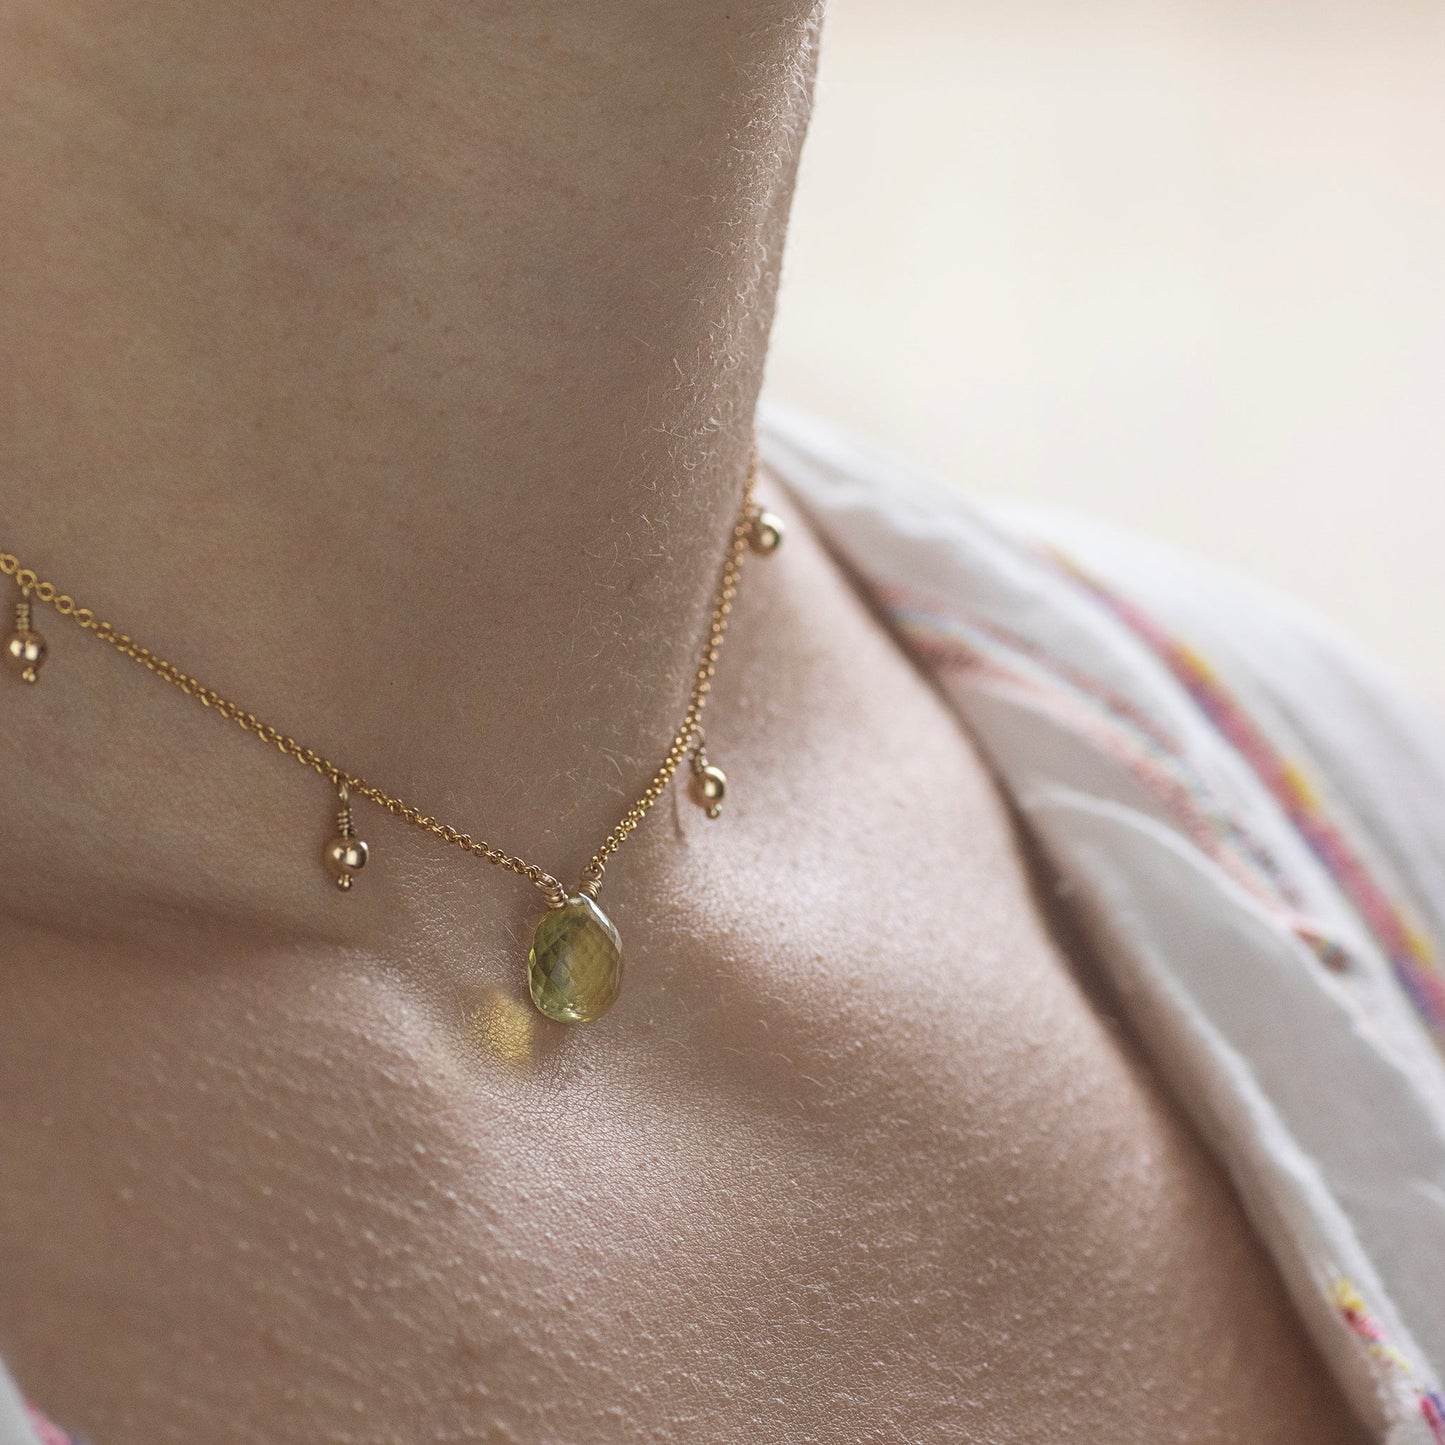 Birthstone Briolette Choker Necklace - Silver & Gold